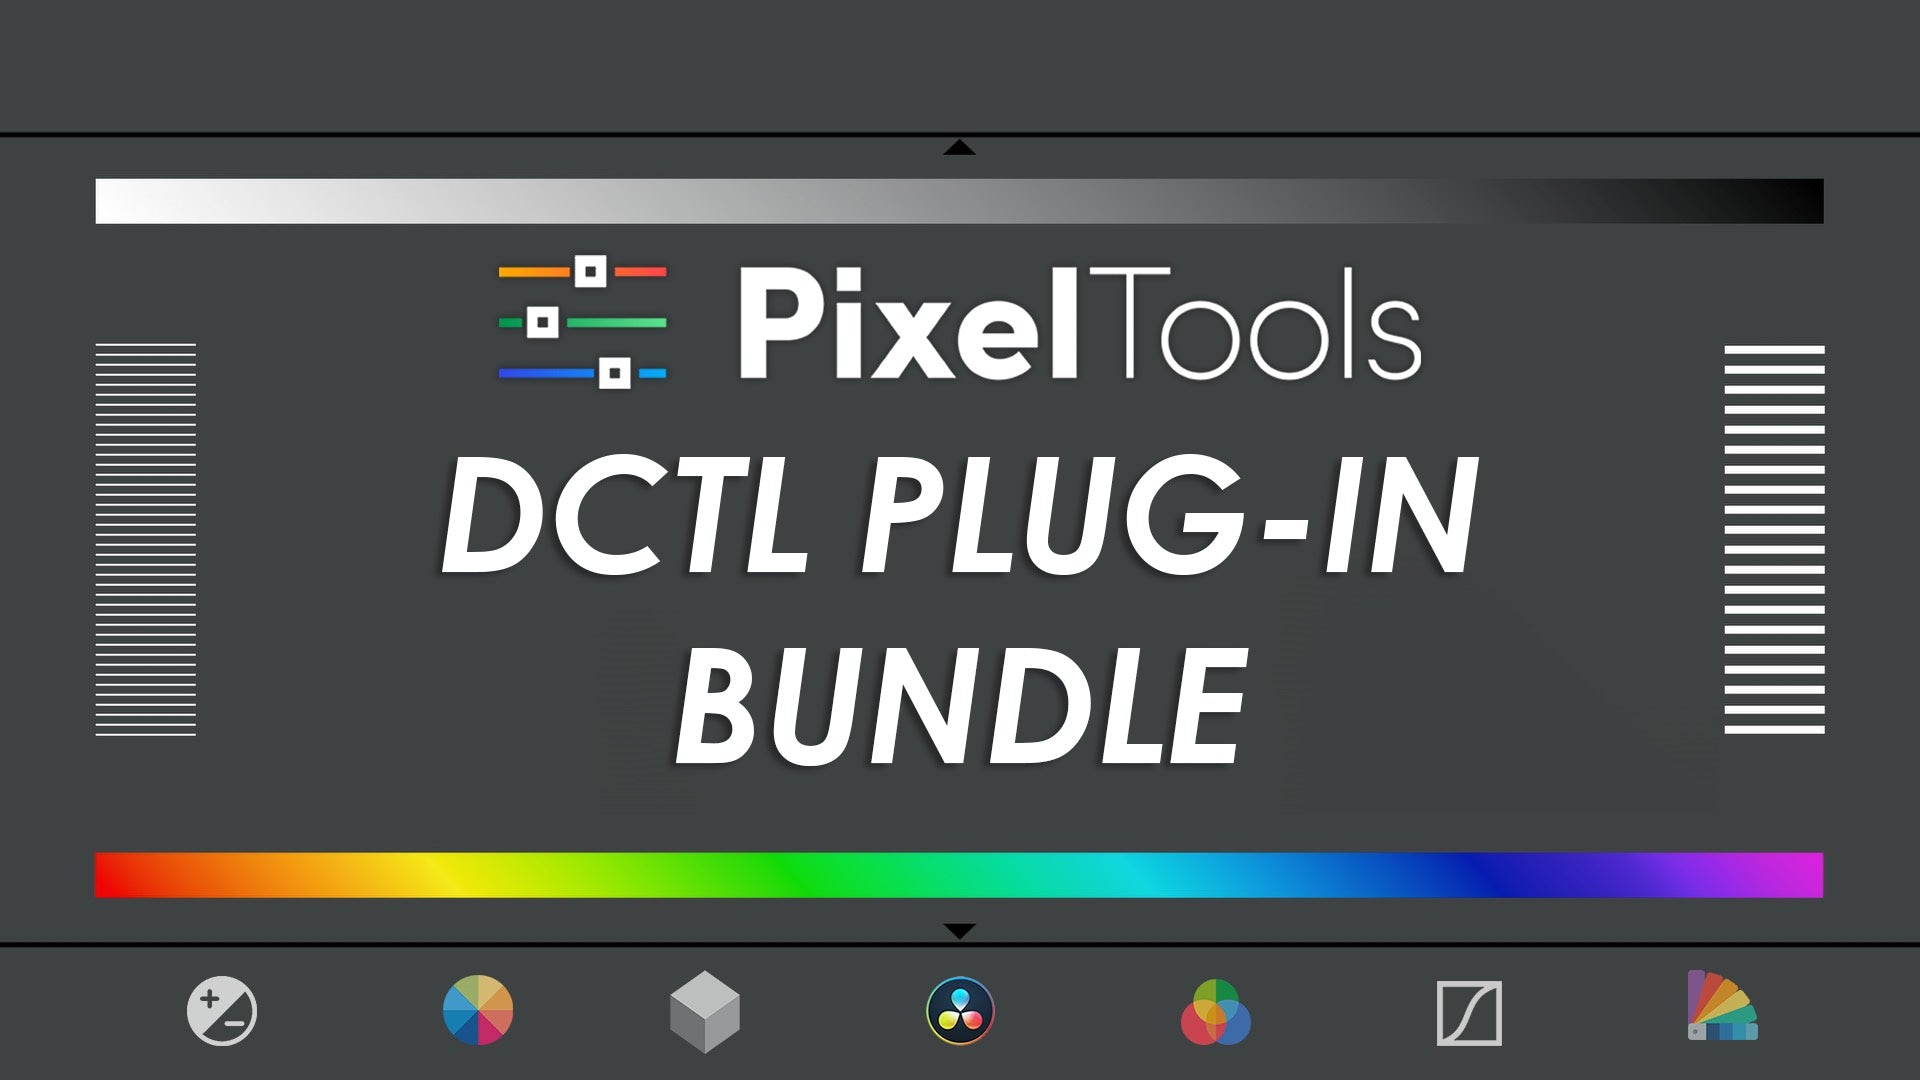 PixelTools DCTL Plug-in Bundle